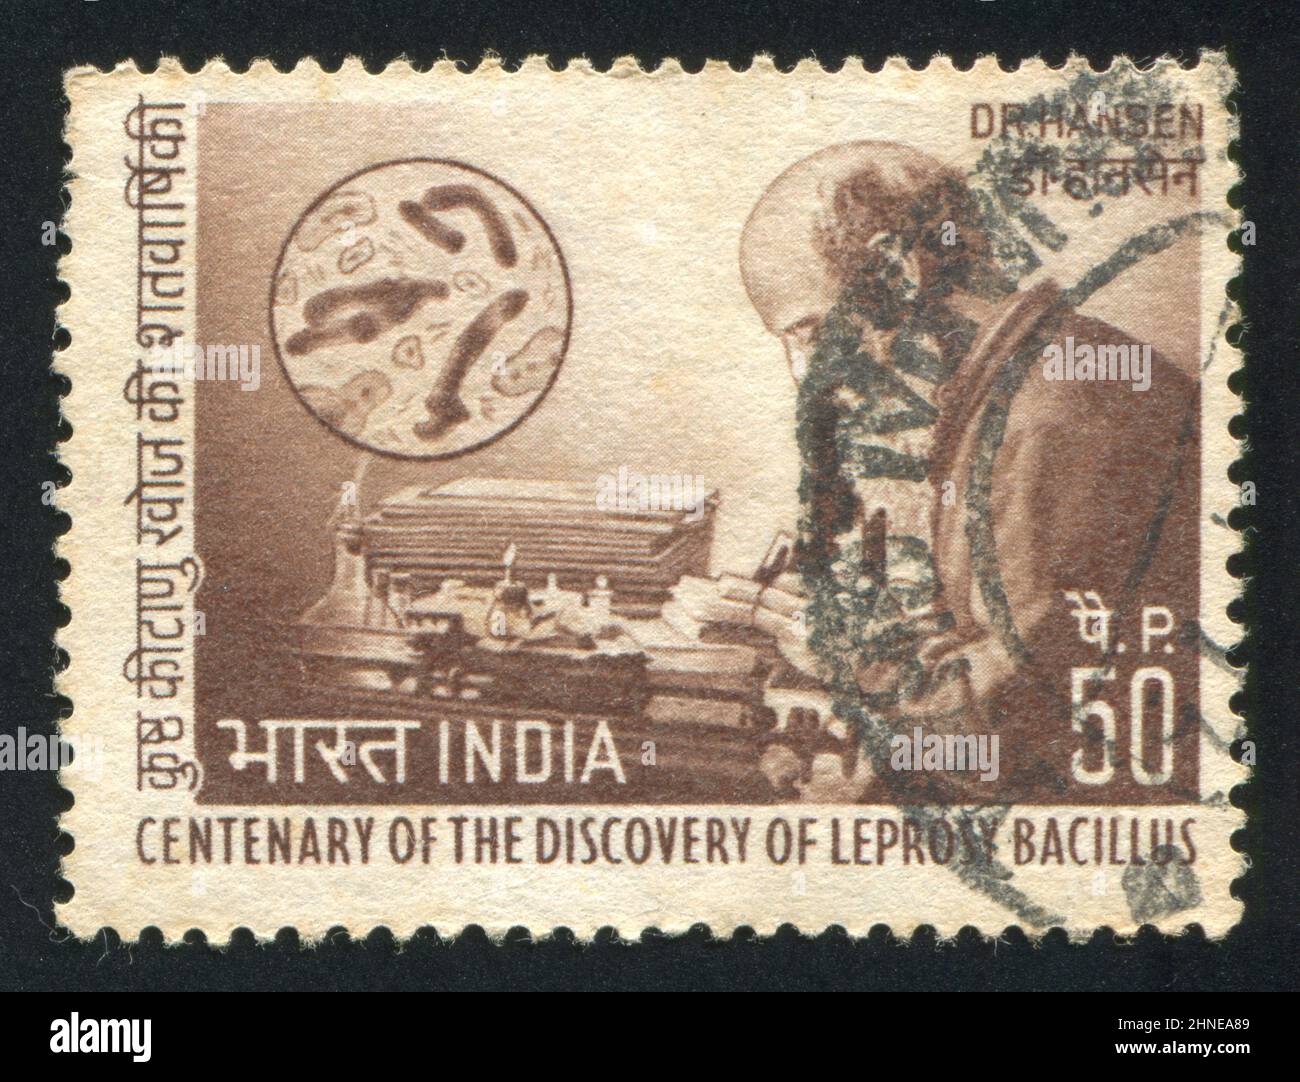 INDIA - CIRCA 1973: stamp printed by India, shows Dr. Armauer, G. Hansen, Microscope, Petri Dish with Bacilli, circa 1973 Stock Photo